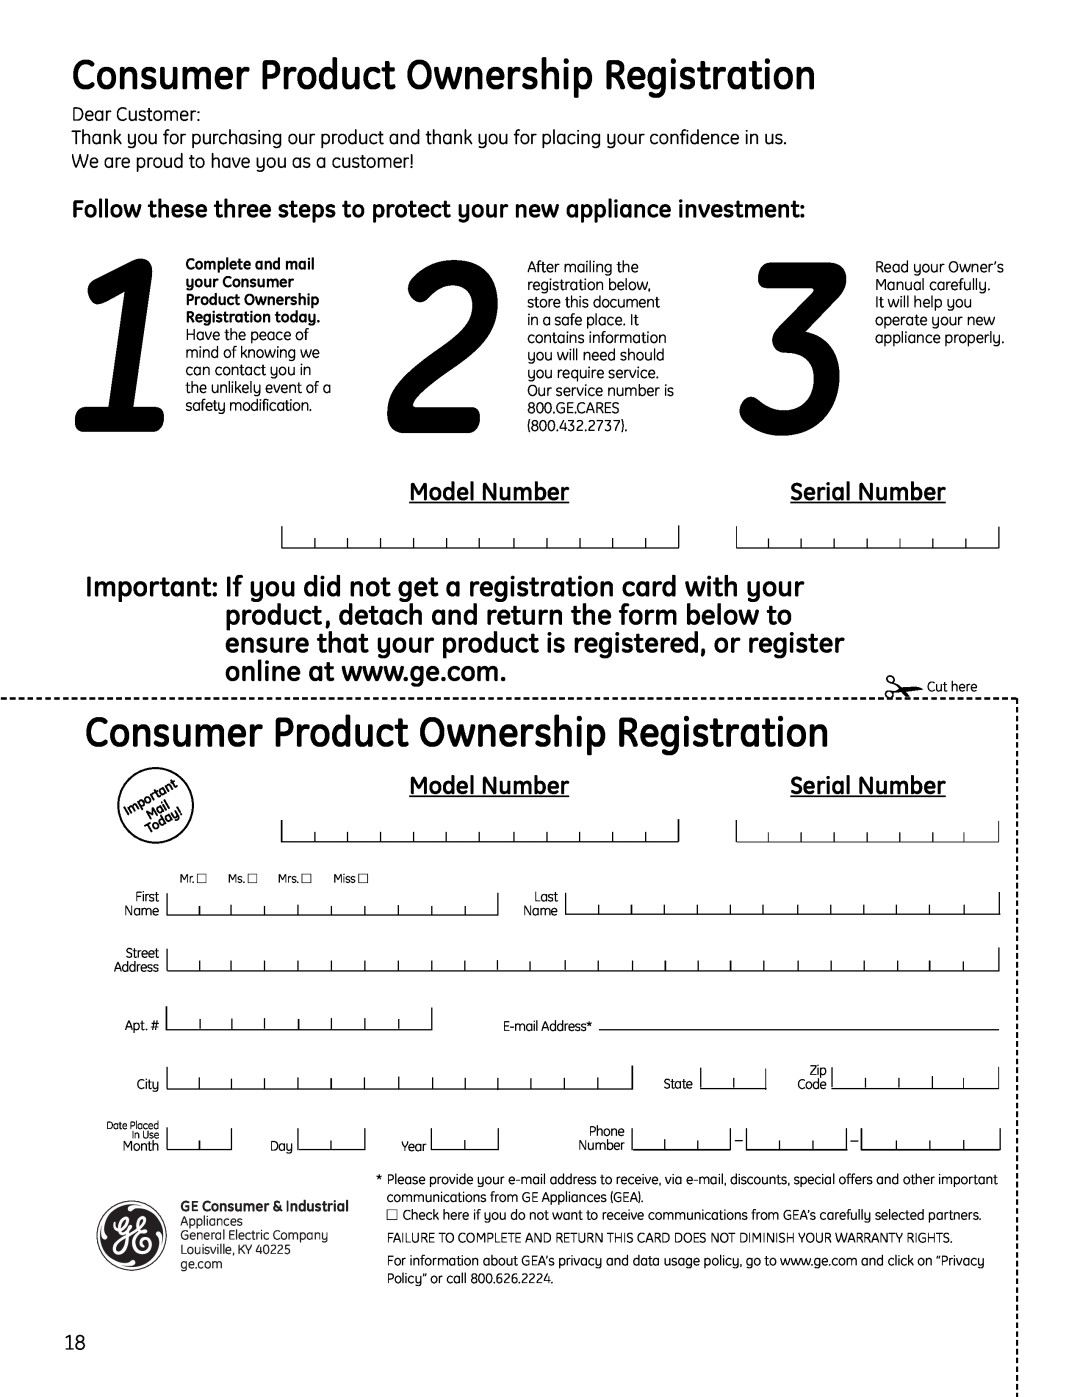 GE FUM13 owner manual Model Number, Dear Customer, Consumer Product Ownership Registration, Serial Number 